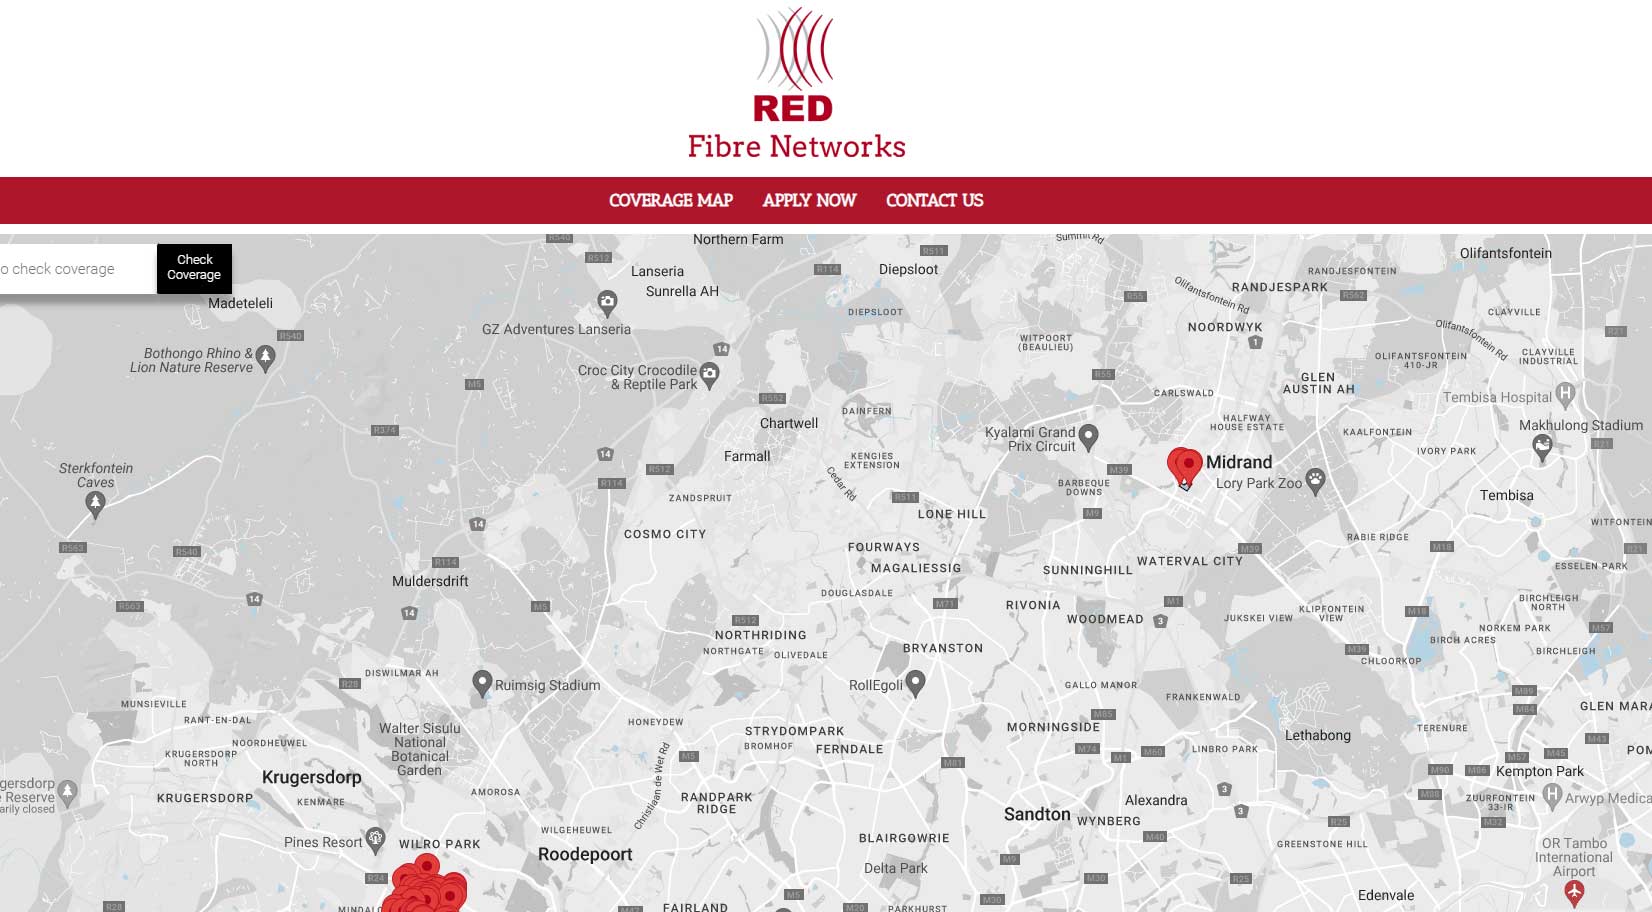 Red Fibre Networks